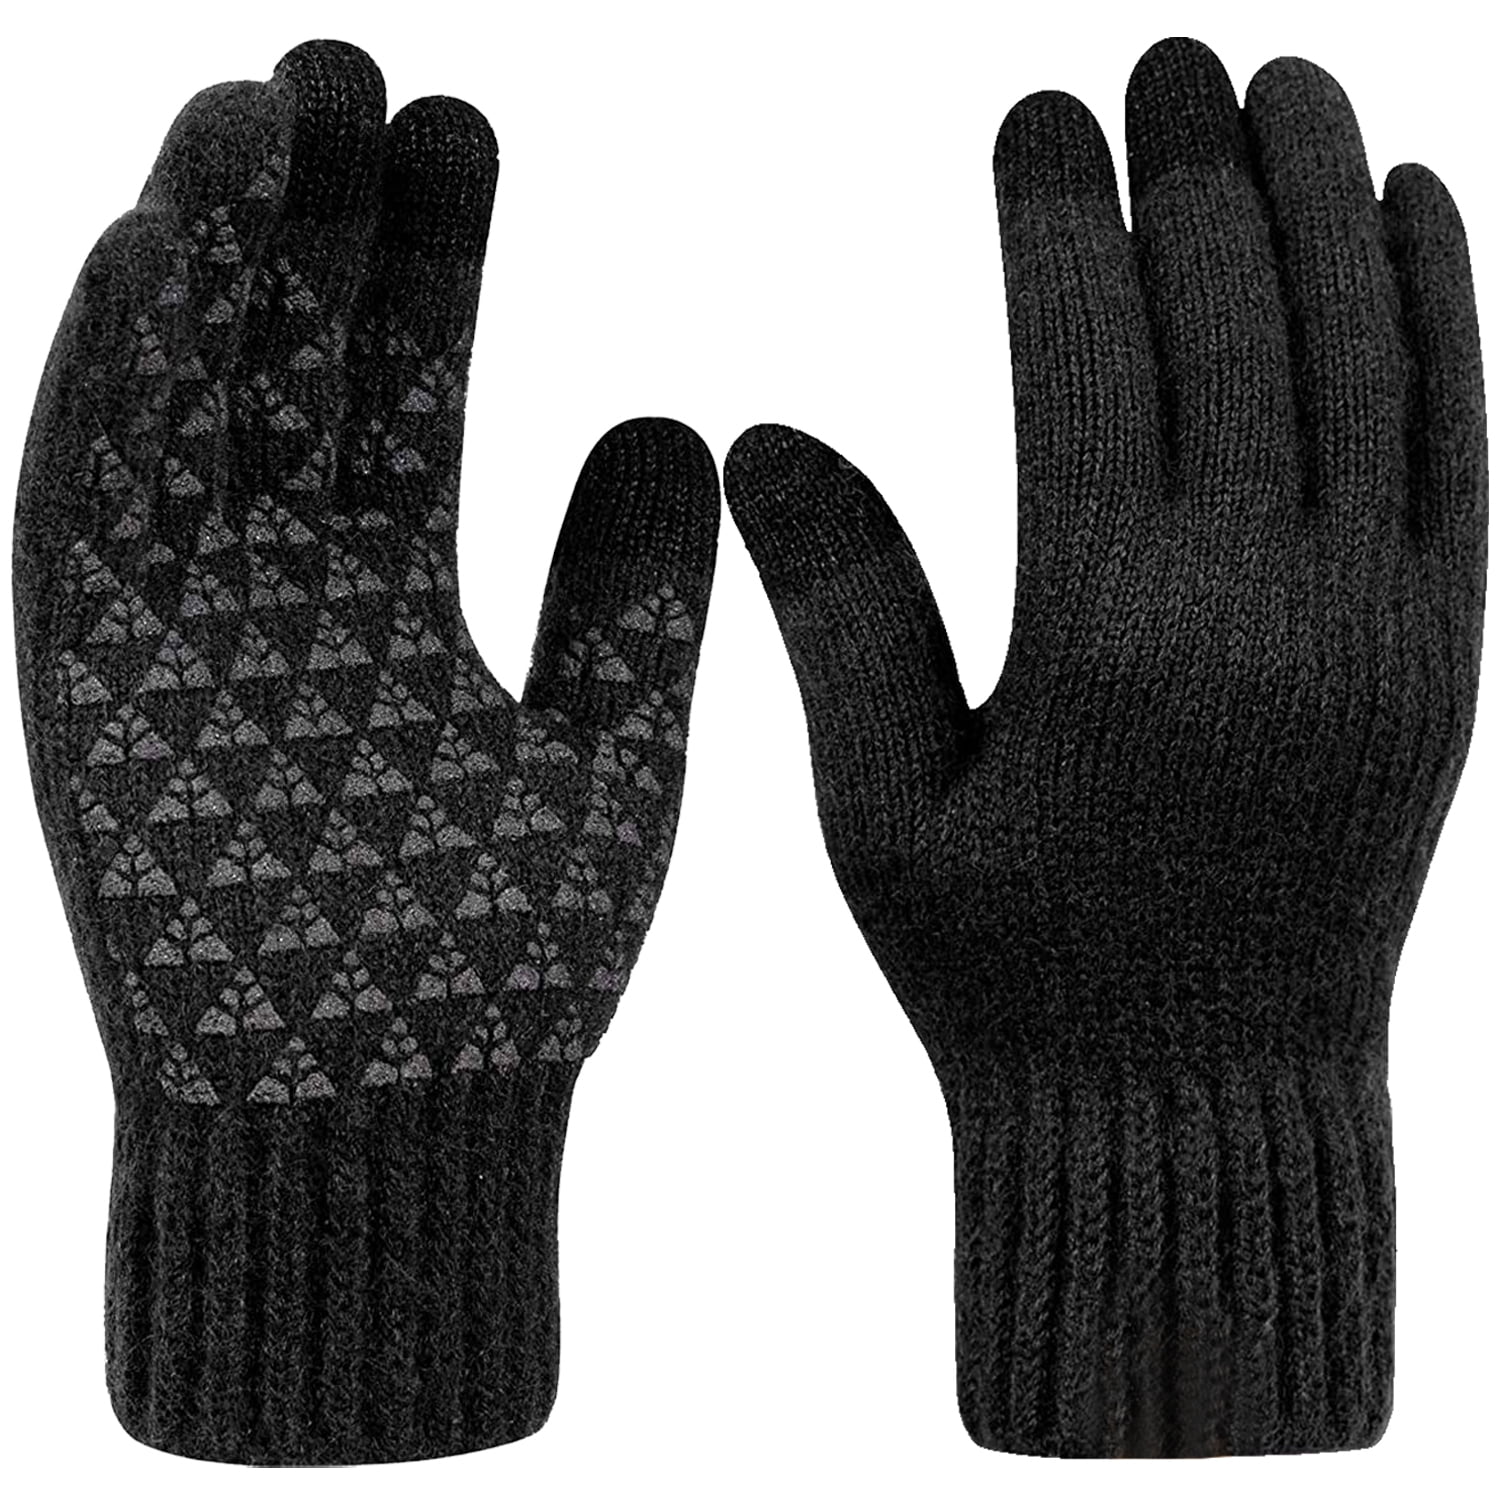 Men Women Winter Warm Gloves Knit Fleece Lined Full Finger Touch Screen Gloves 